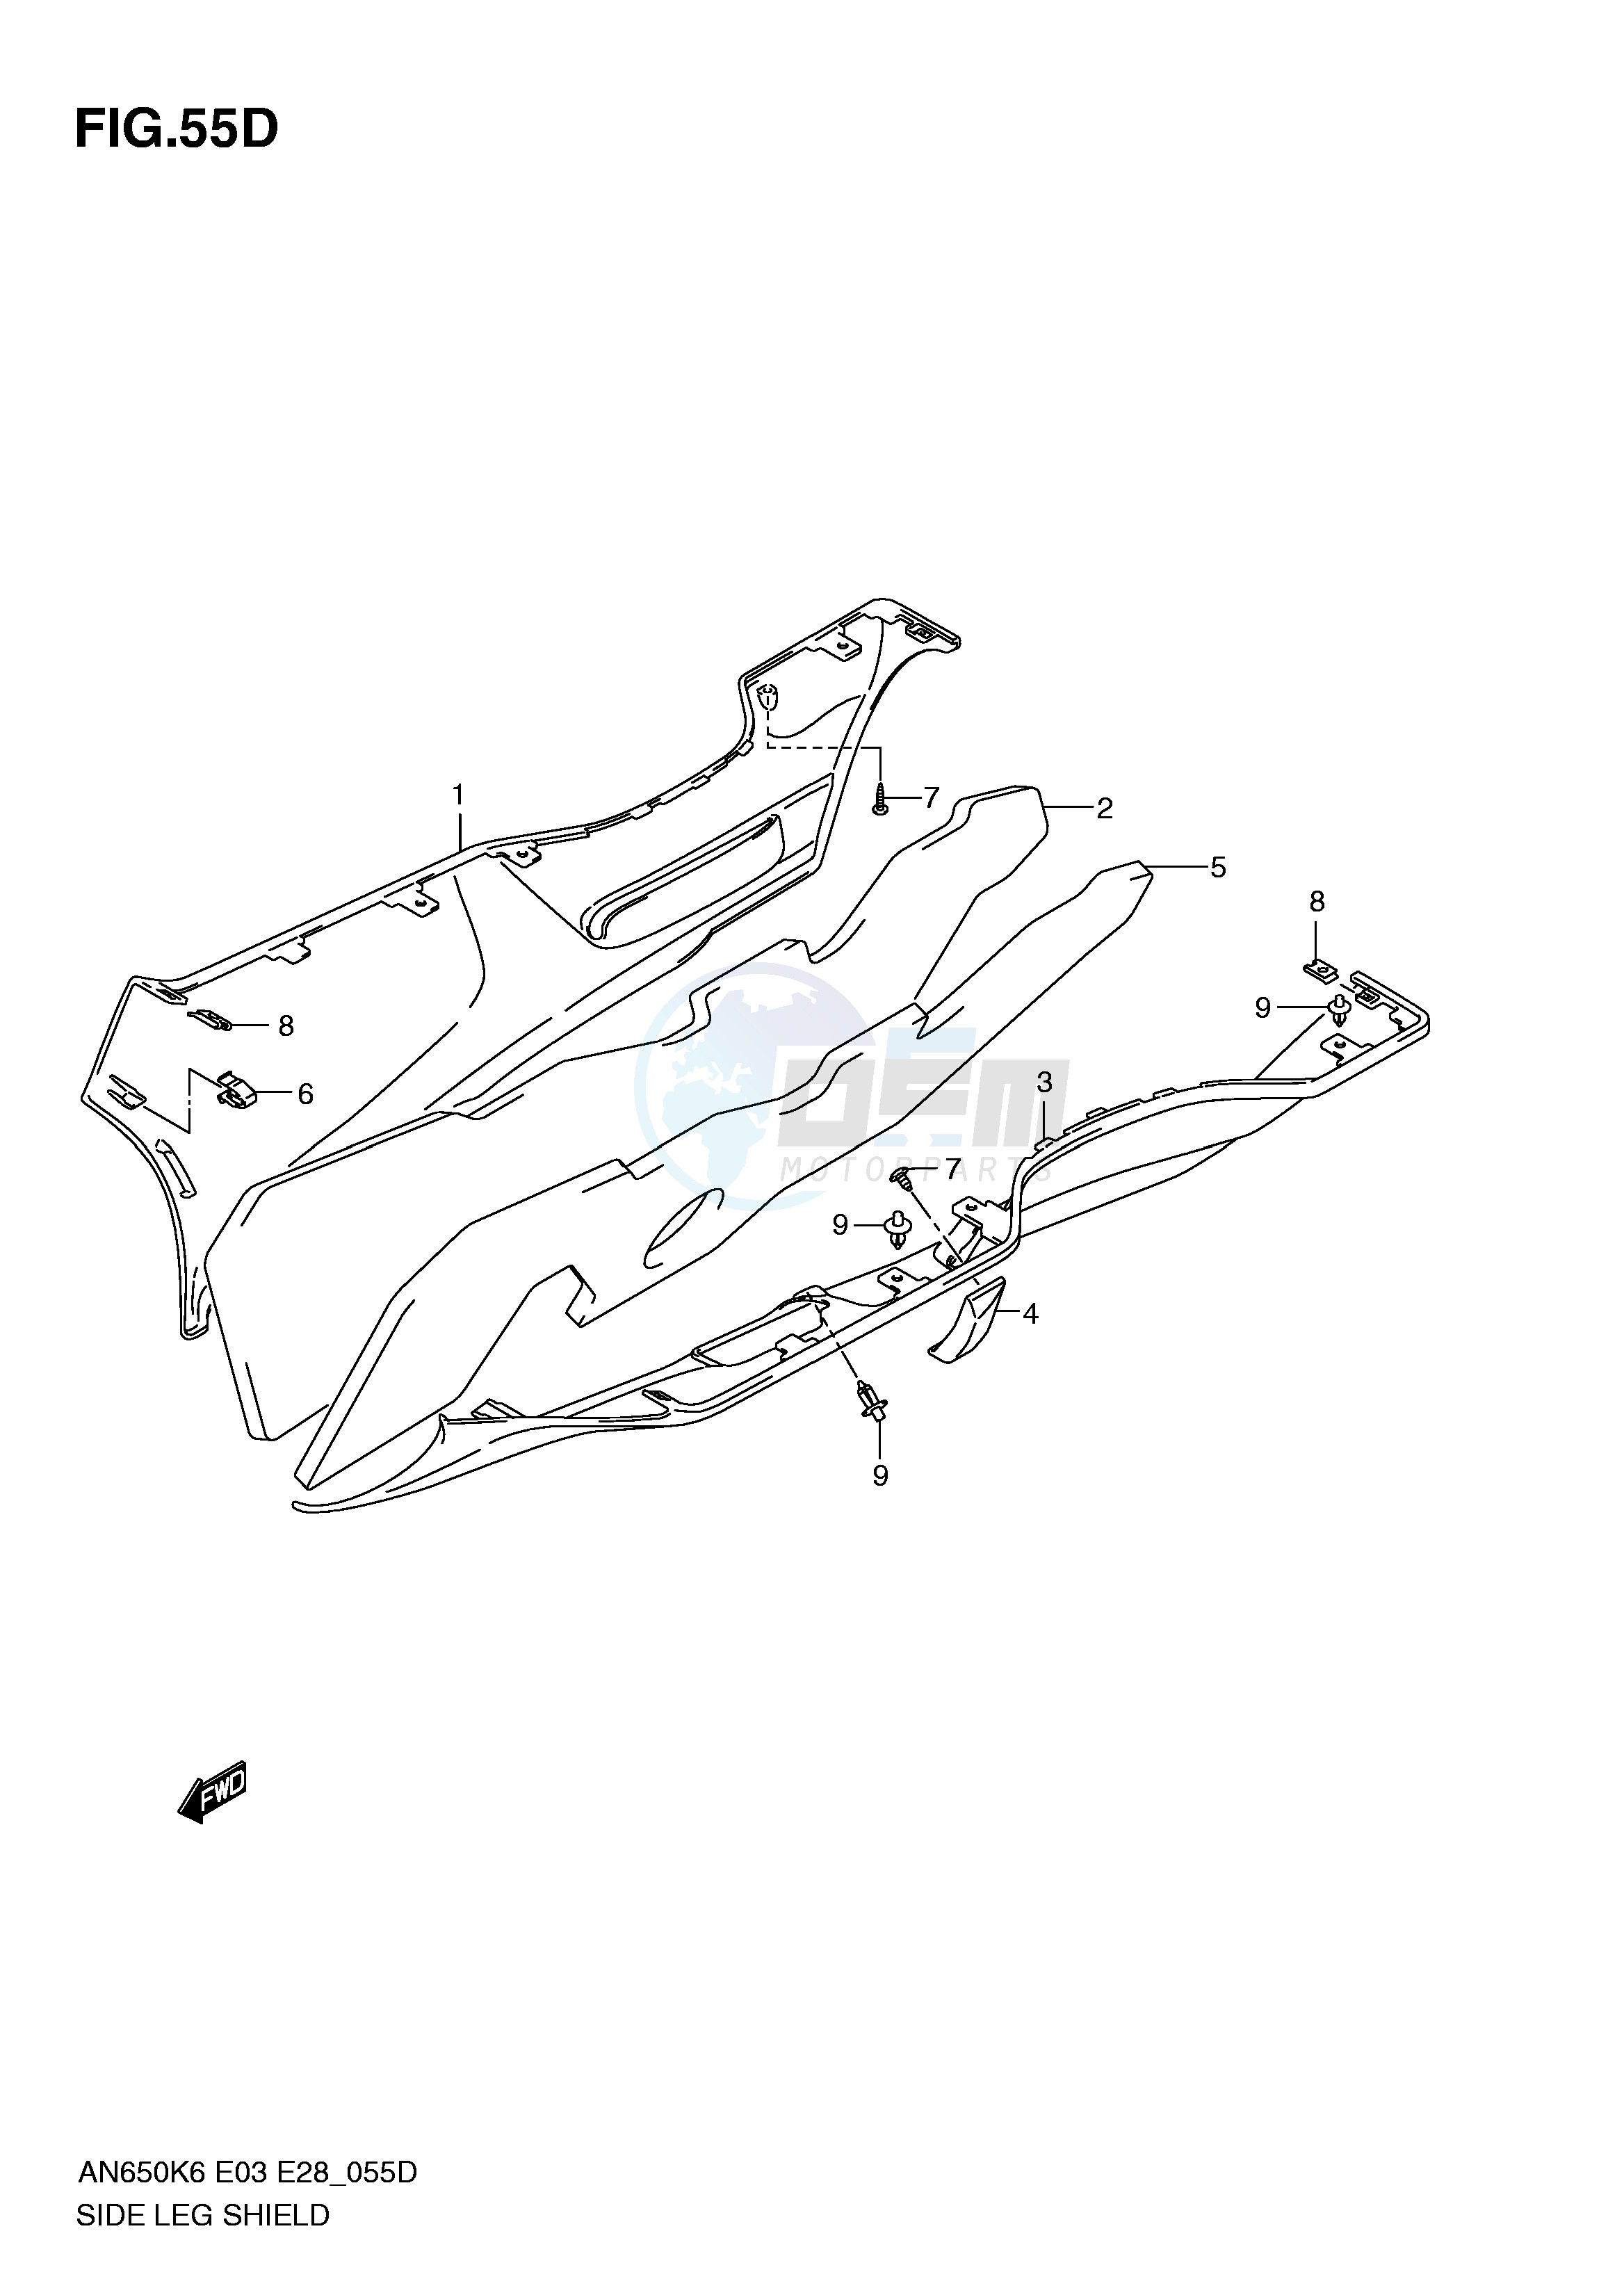 SIDE LEG SHIELD (MODEL AN650L0) blueprint